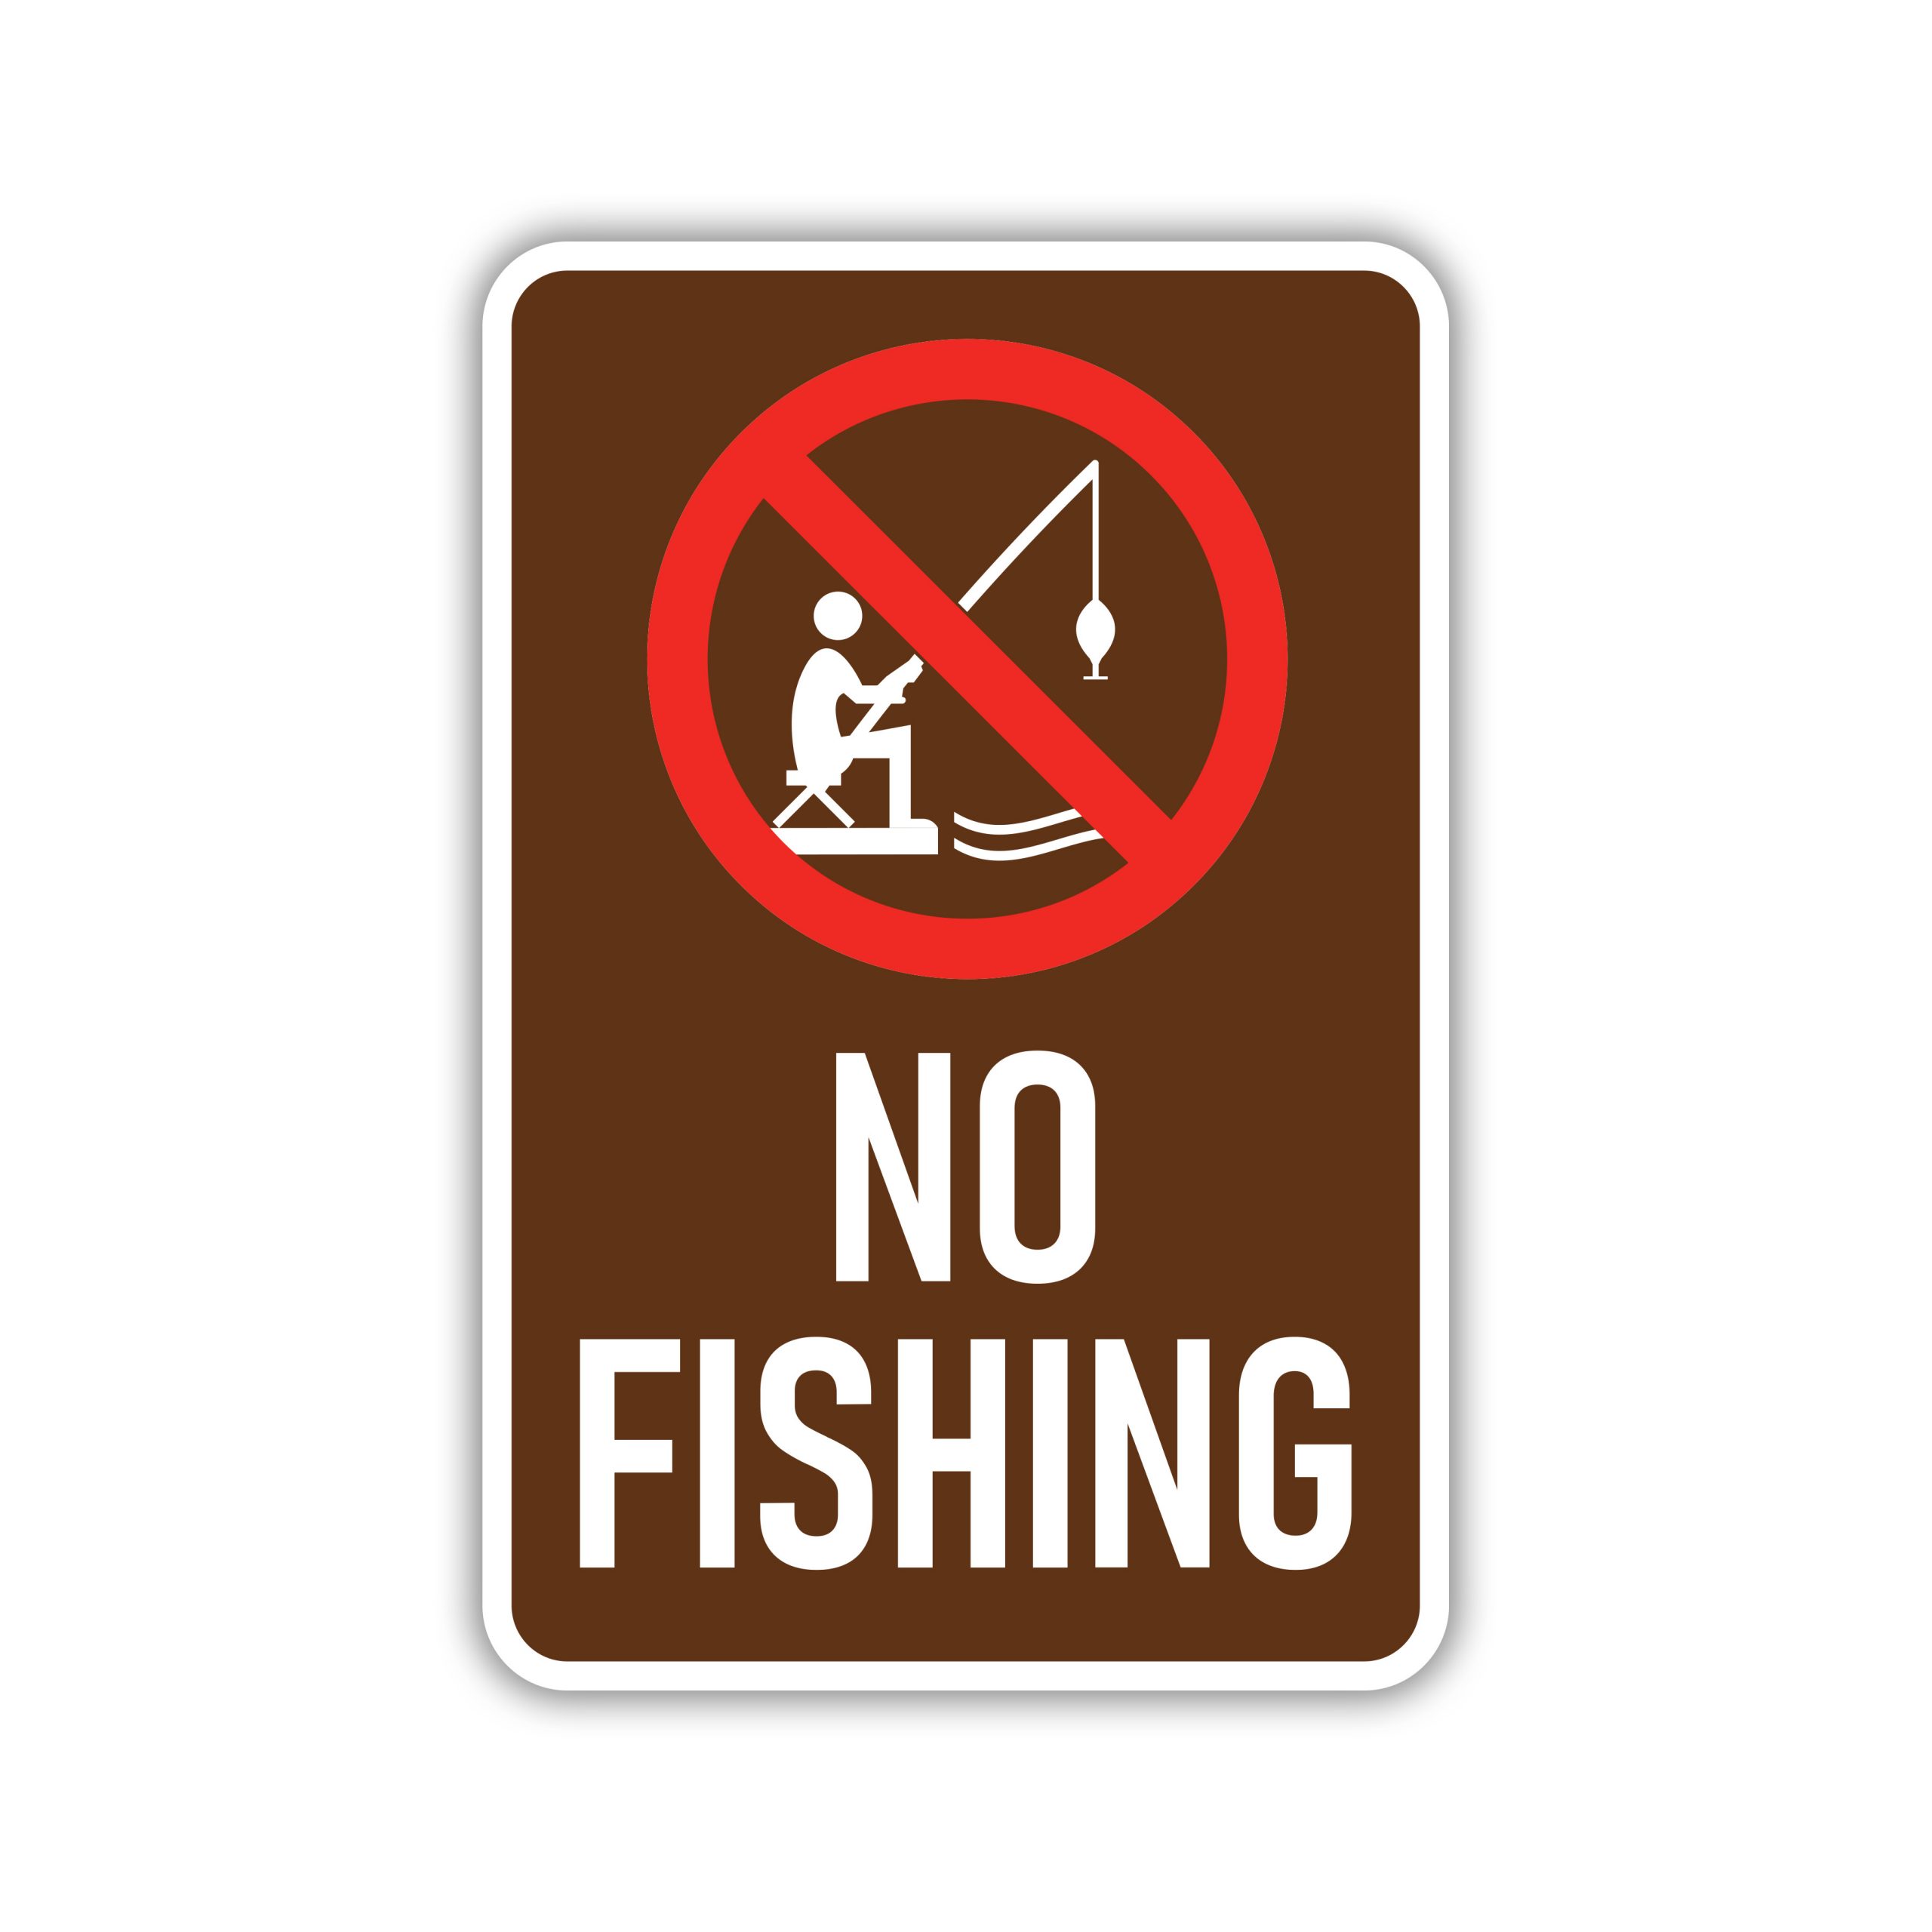 NO FISHING - American Sign Company